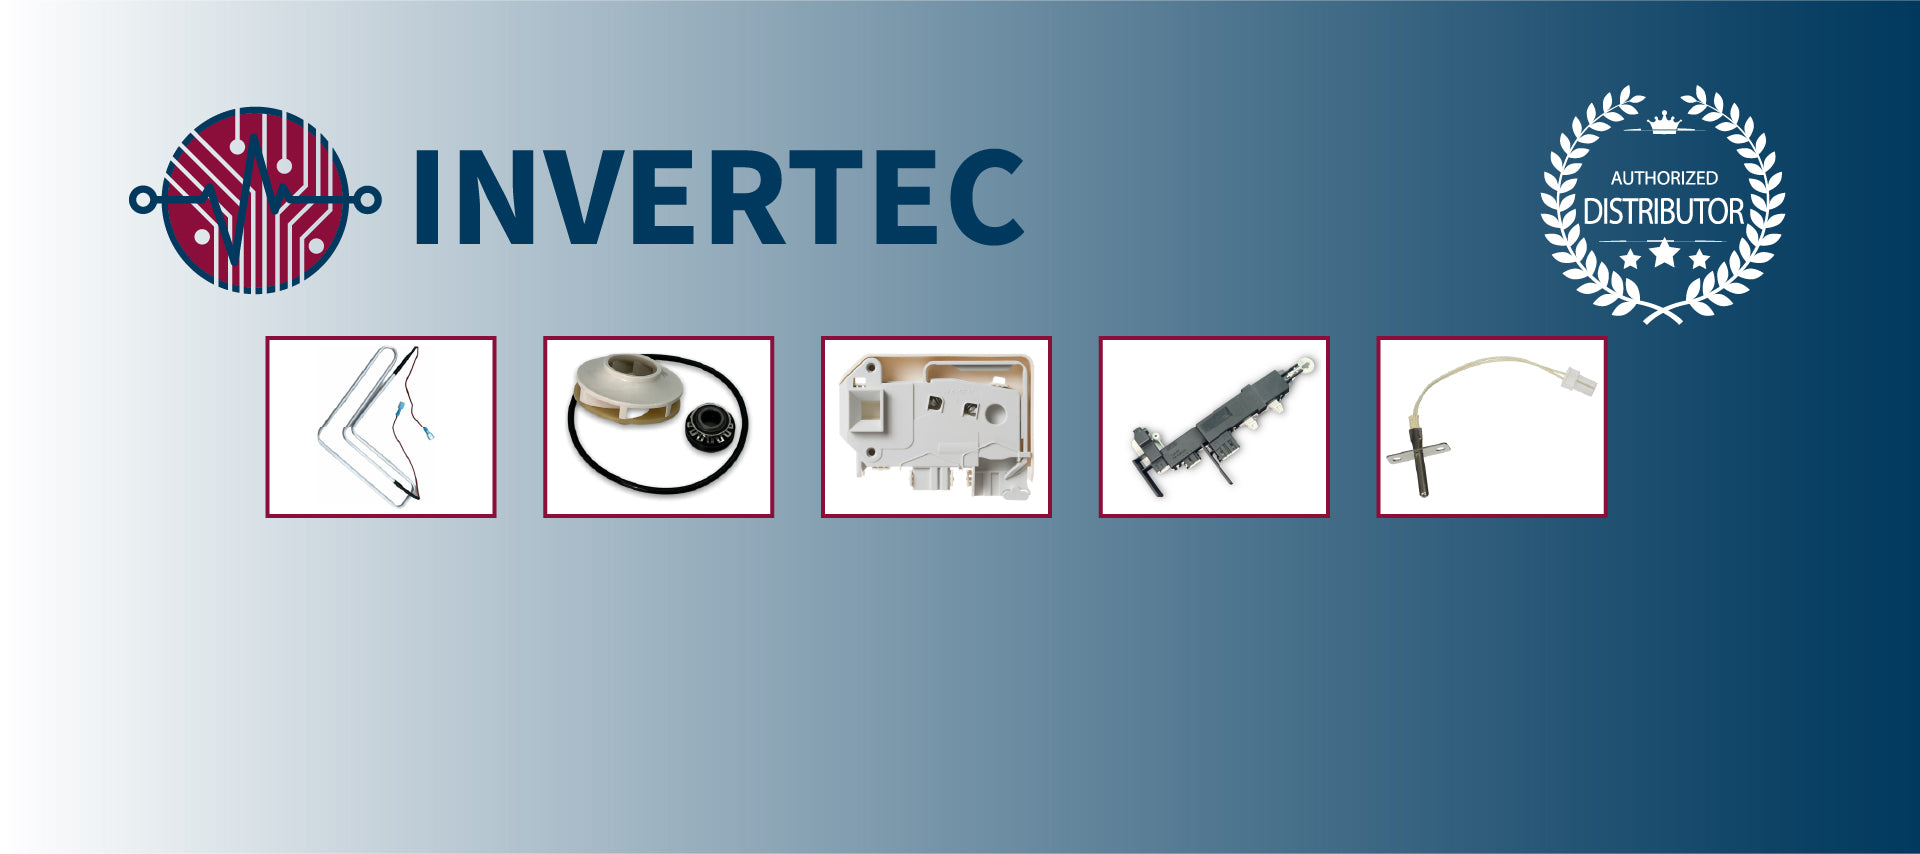 Invertec Home Appliance Replacement Parts Manufacturer